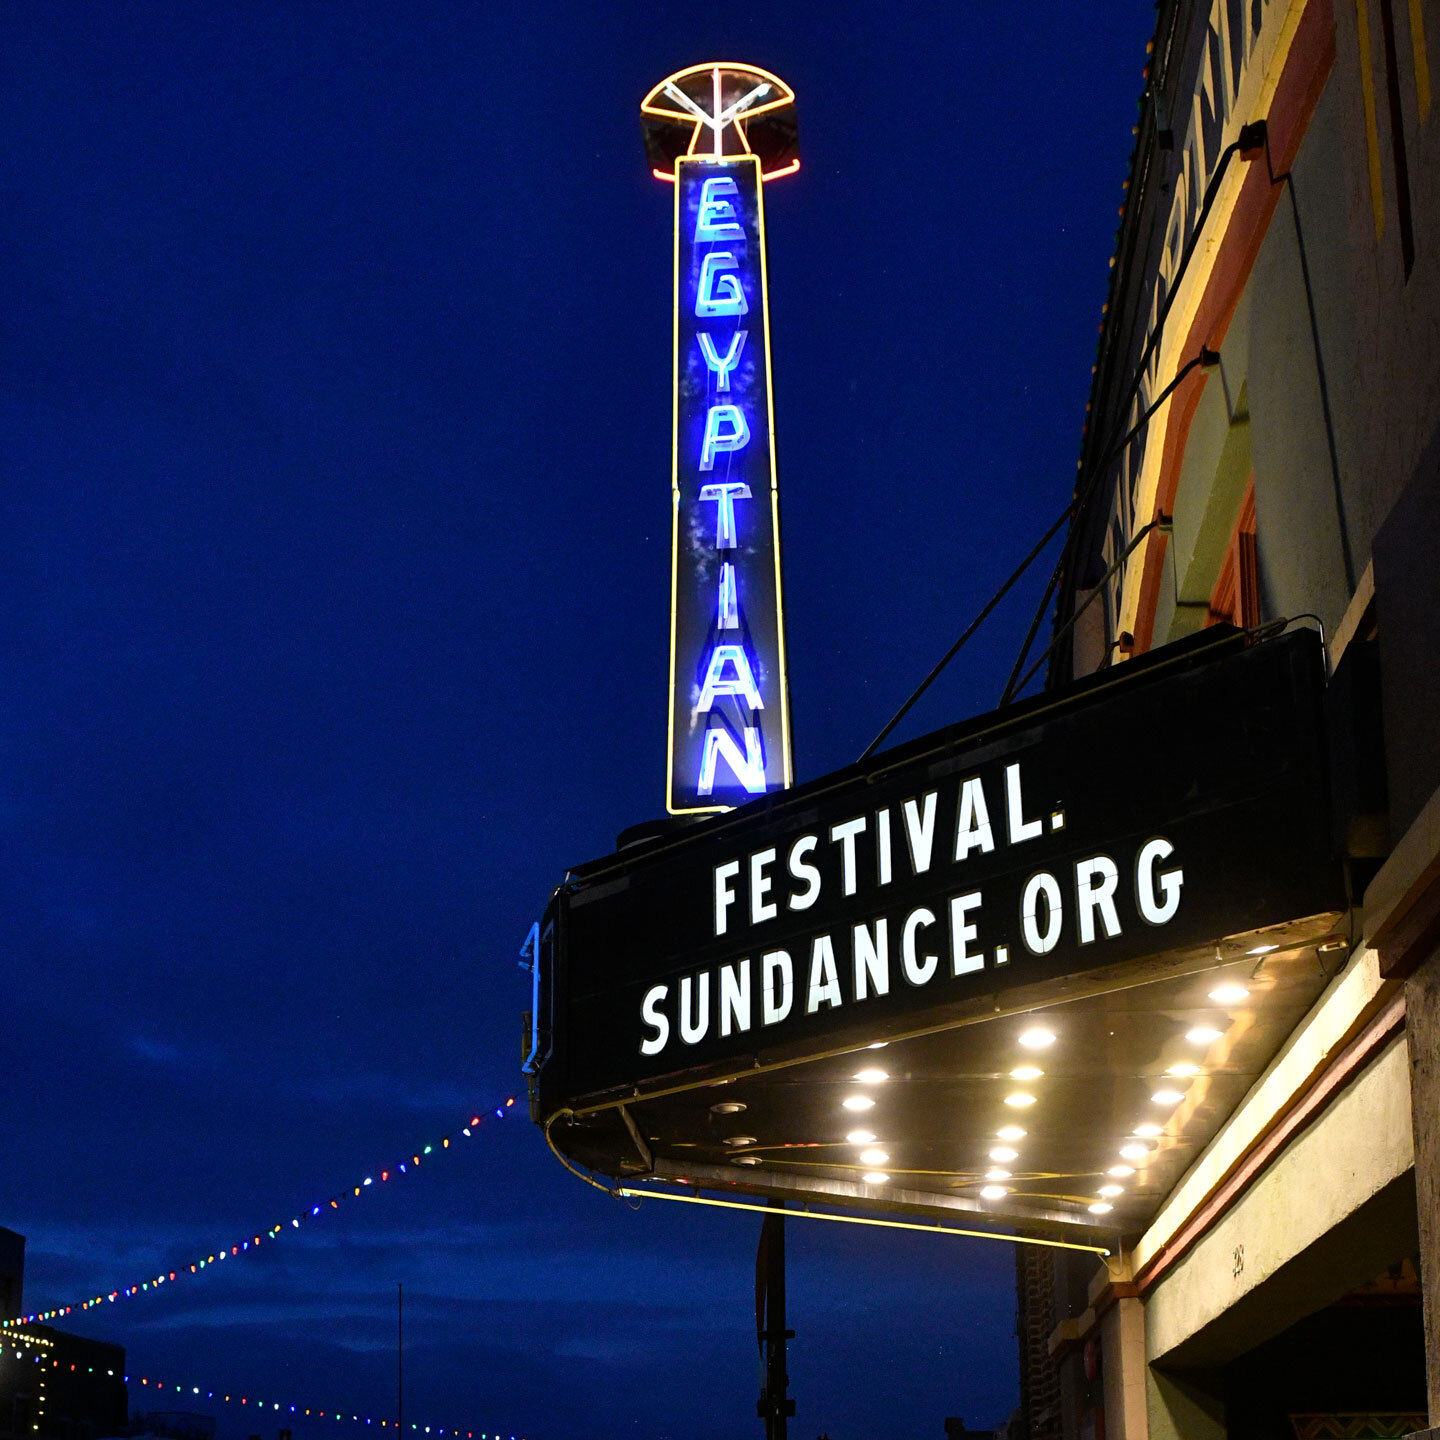 Teatro Egyptian del Festival de Cine de Sundance, con el texto Festival.Sundance.Org en la marquesina